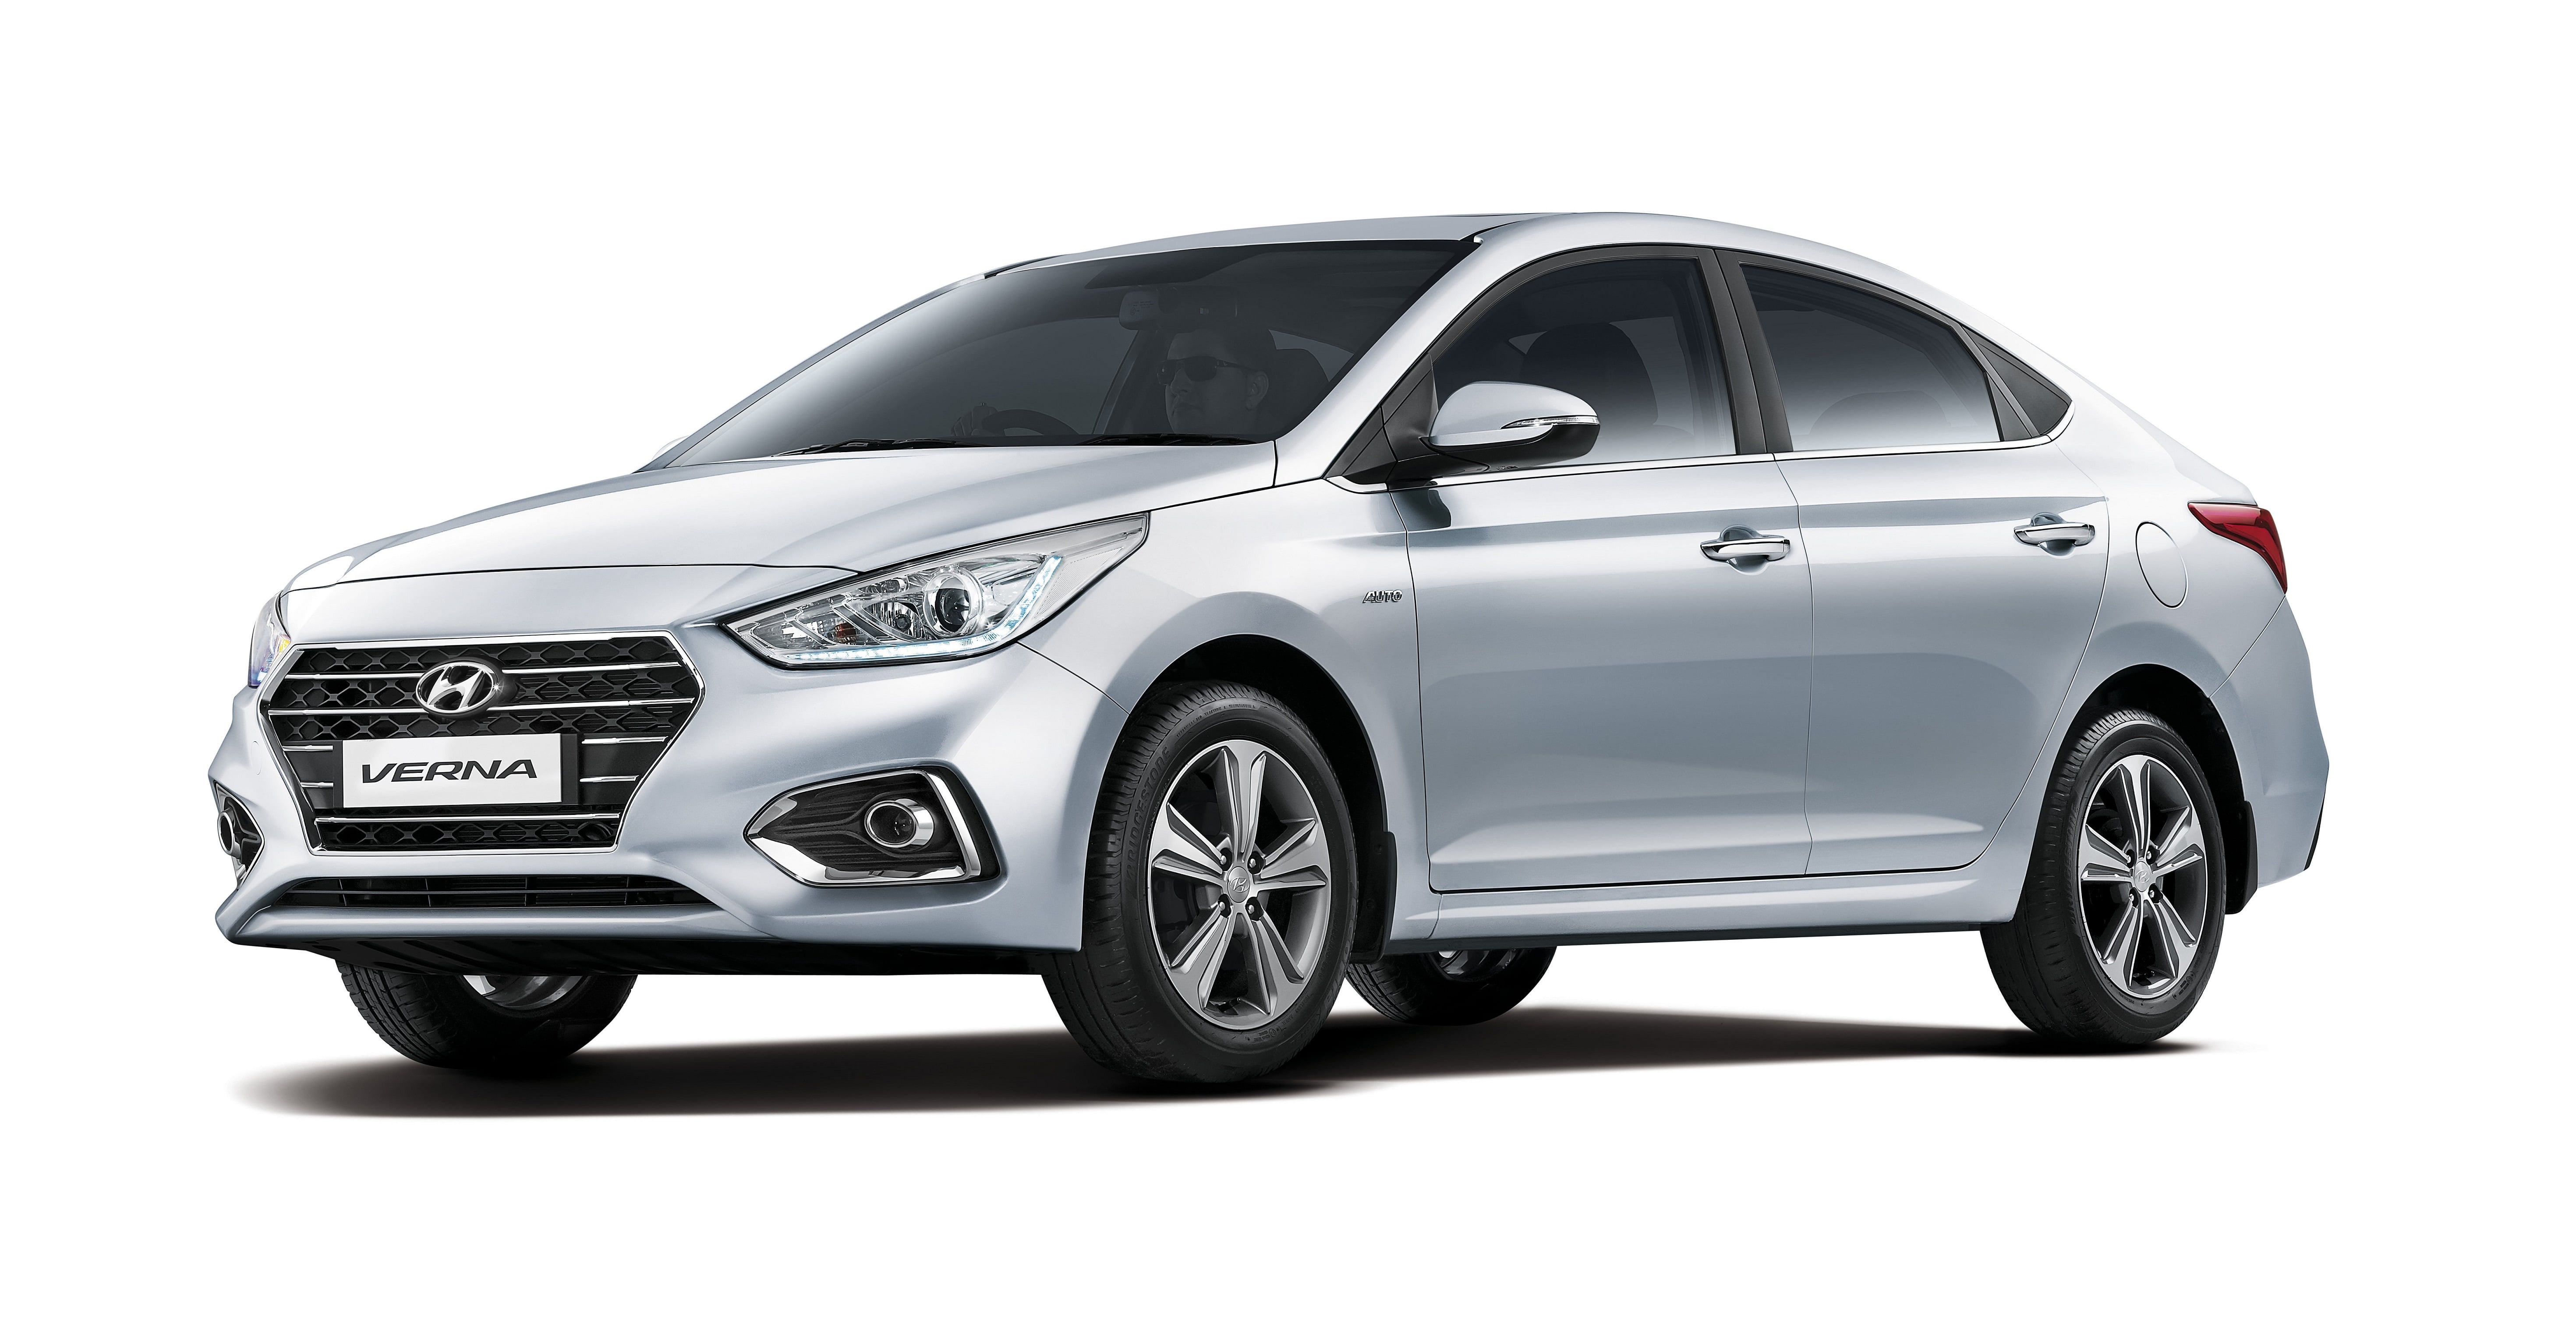 New 2017 Hyundai Verna vs Honda City Comparison- Price, Specifications